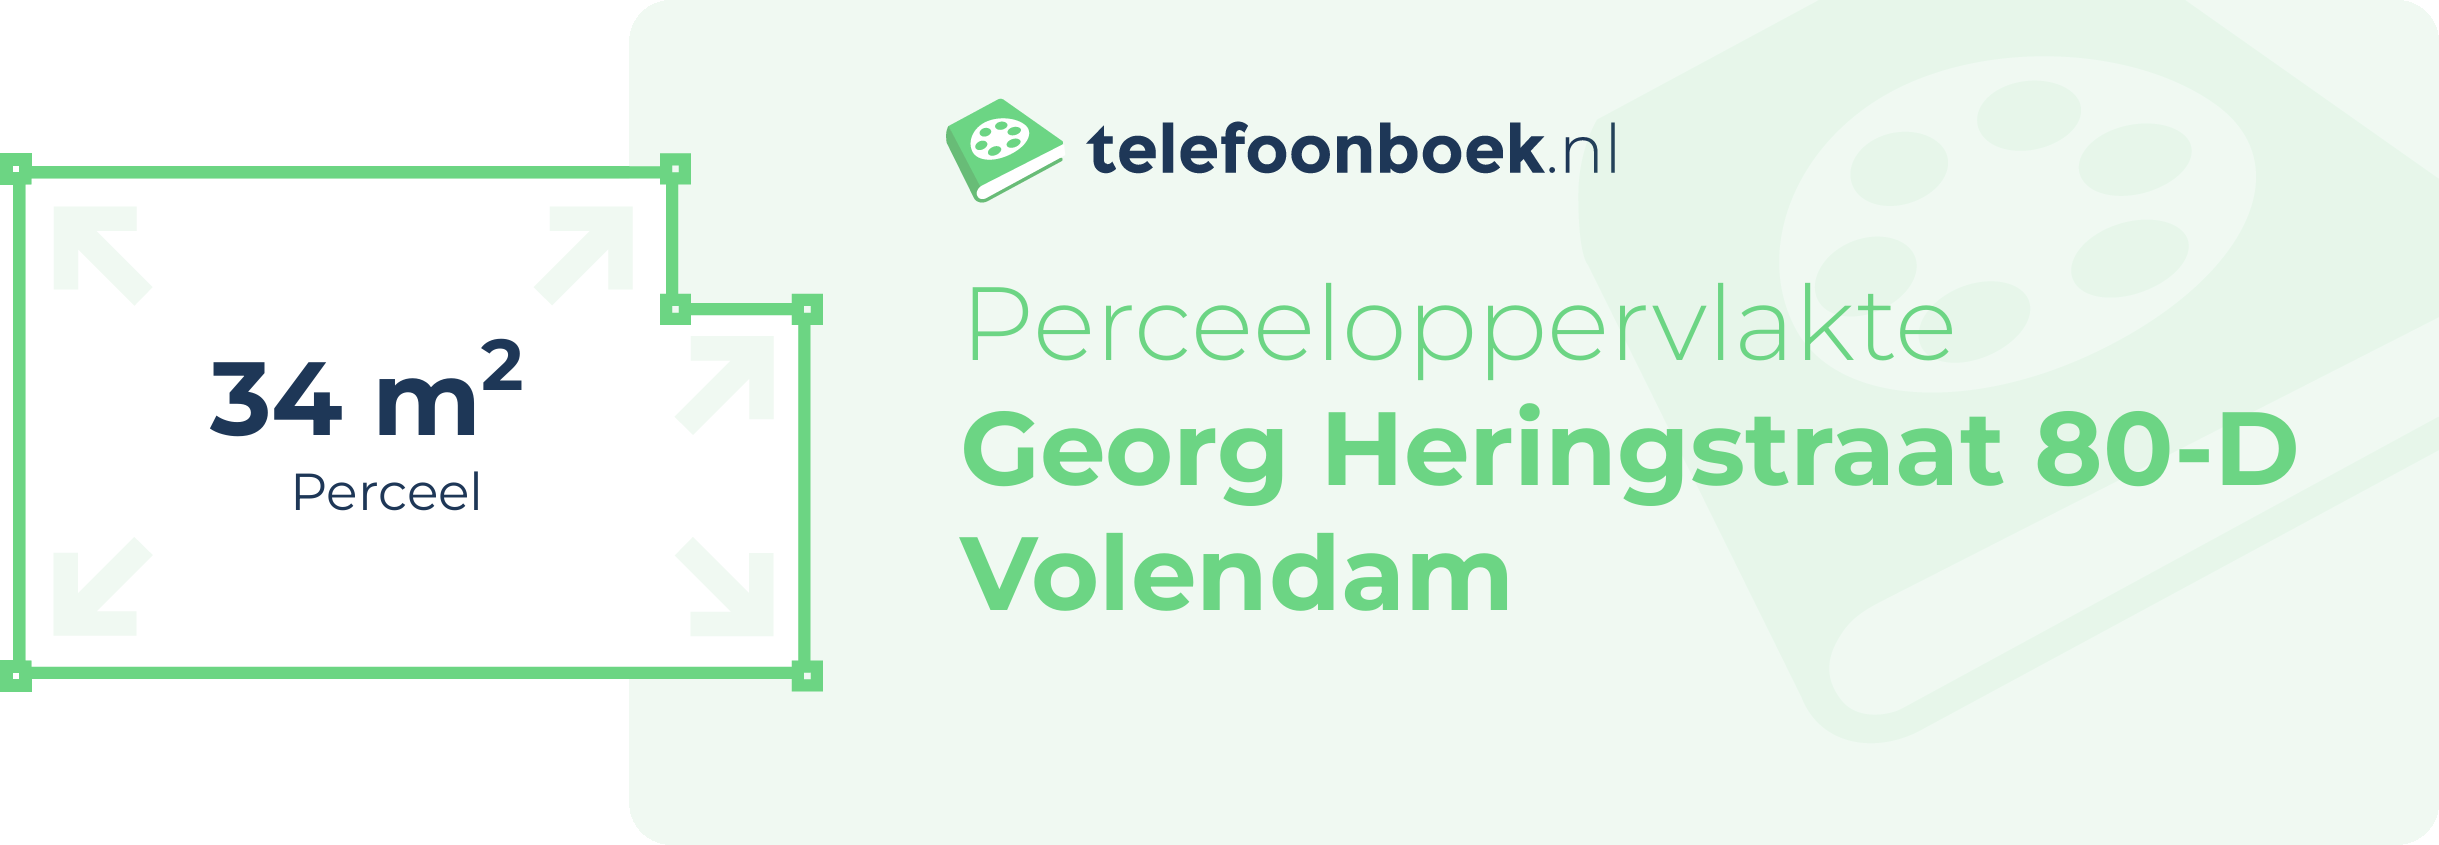 Perceeloppervlakte Georg Heringstraat 80-D Volendam